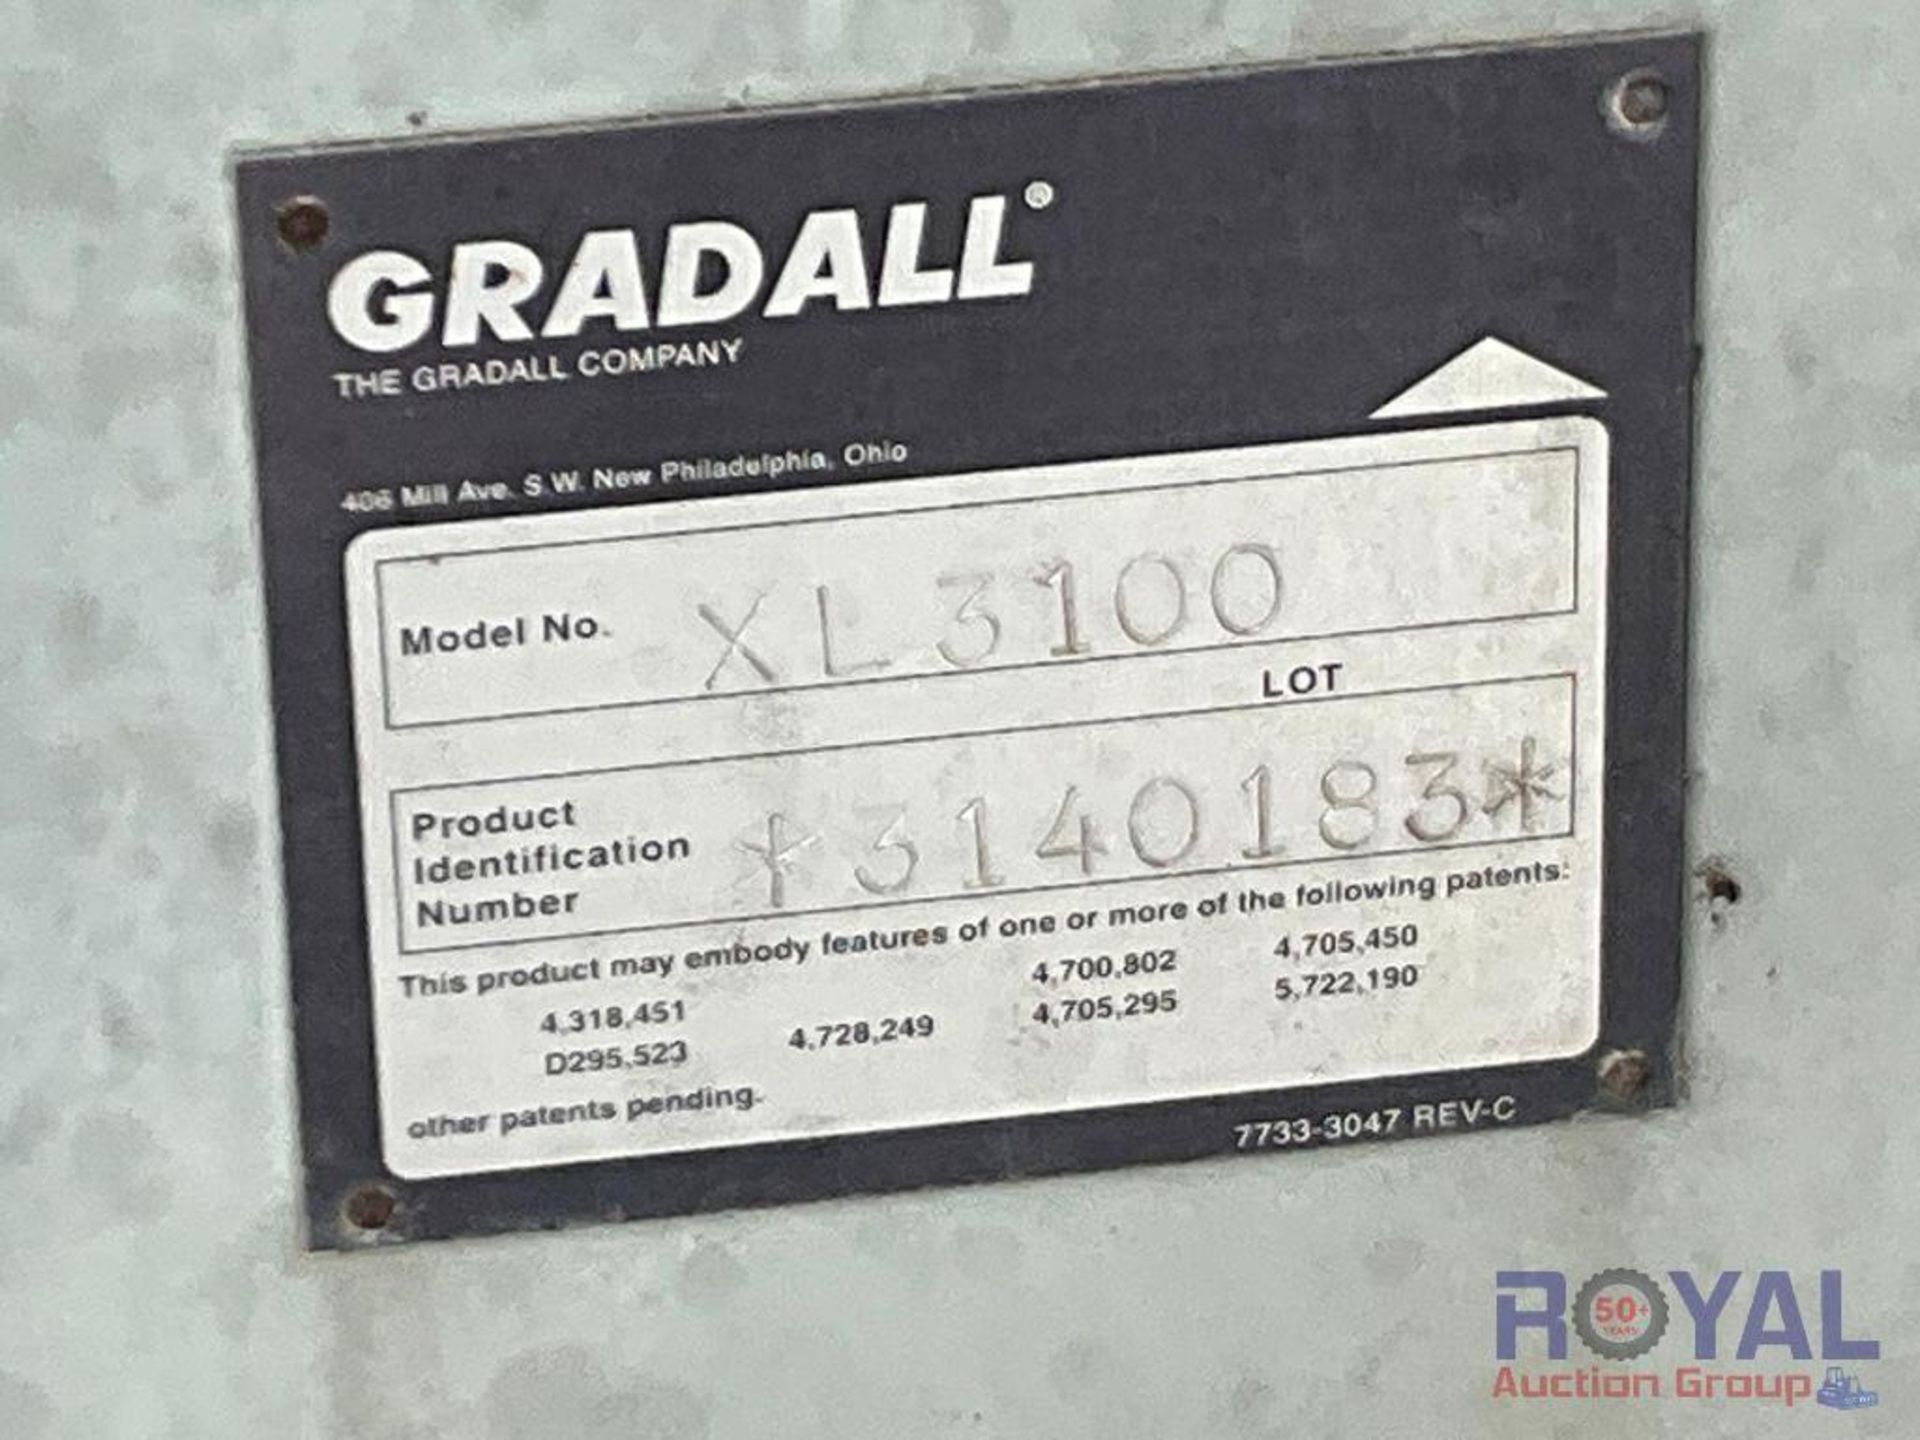 2004 Gradall XL3100 Highway Grading Wheeled Excavator - Image 13 of 42